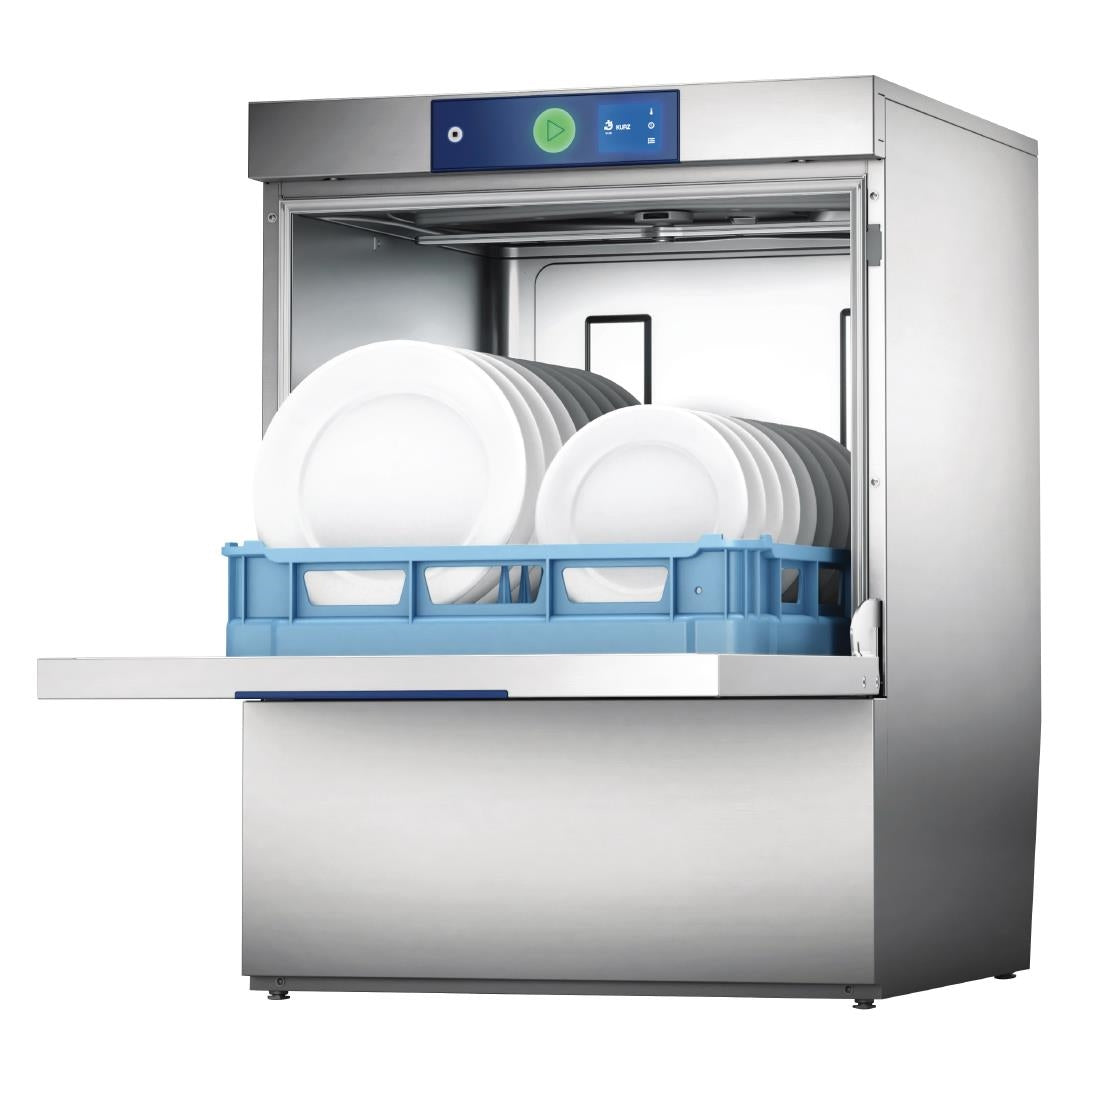 FD247 Hobart Profi Undercounter Dishwasher with Water Softener FXS-10B JD Catering Equipment Solutions Ltd